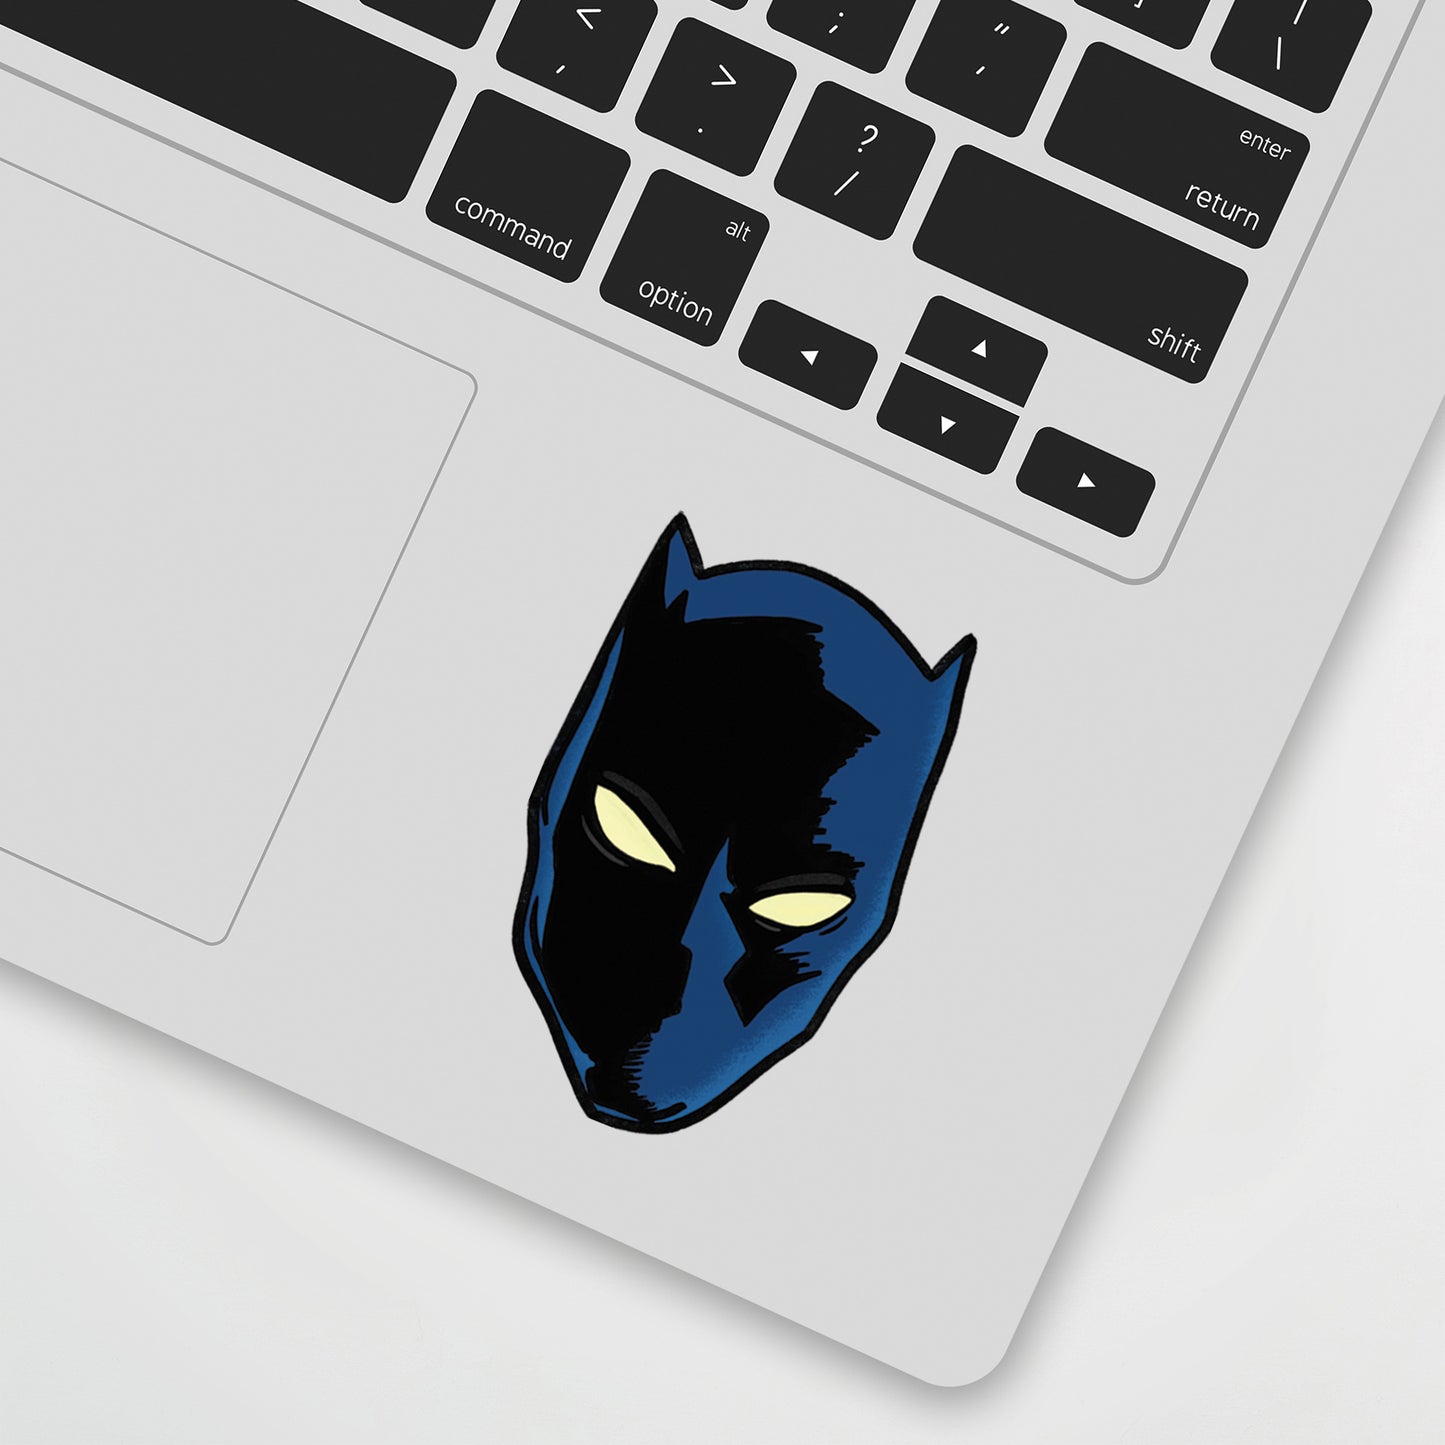 Black Panther Sticker